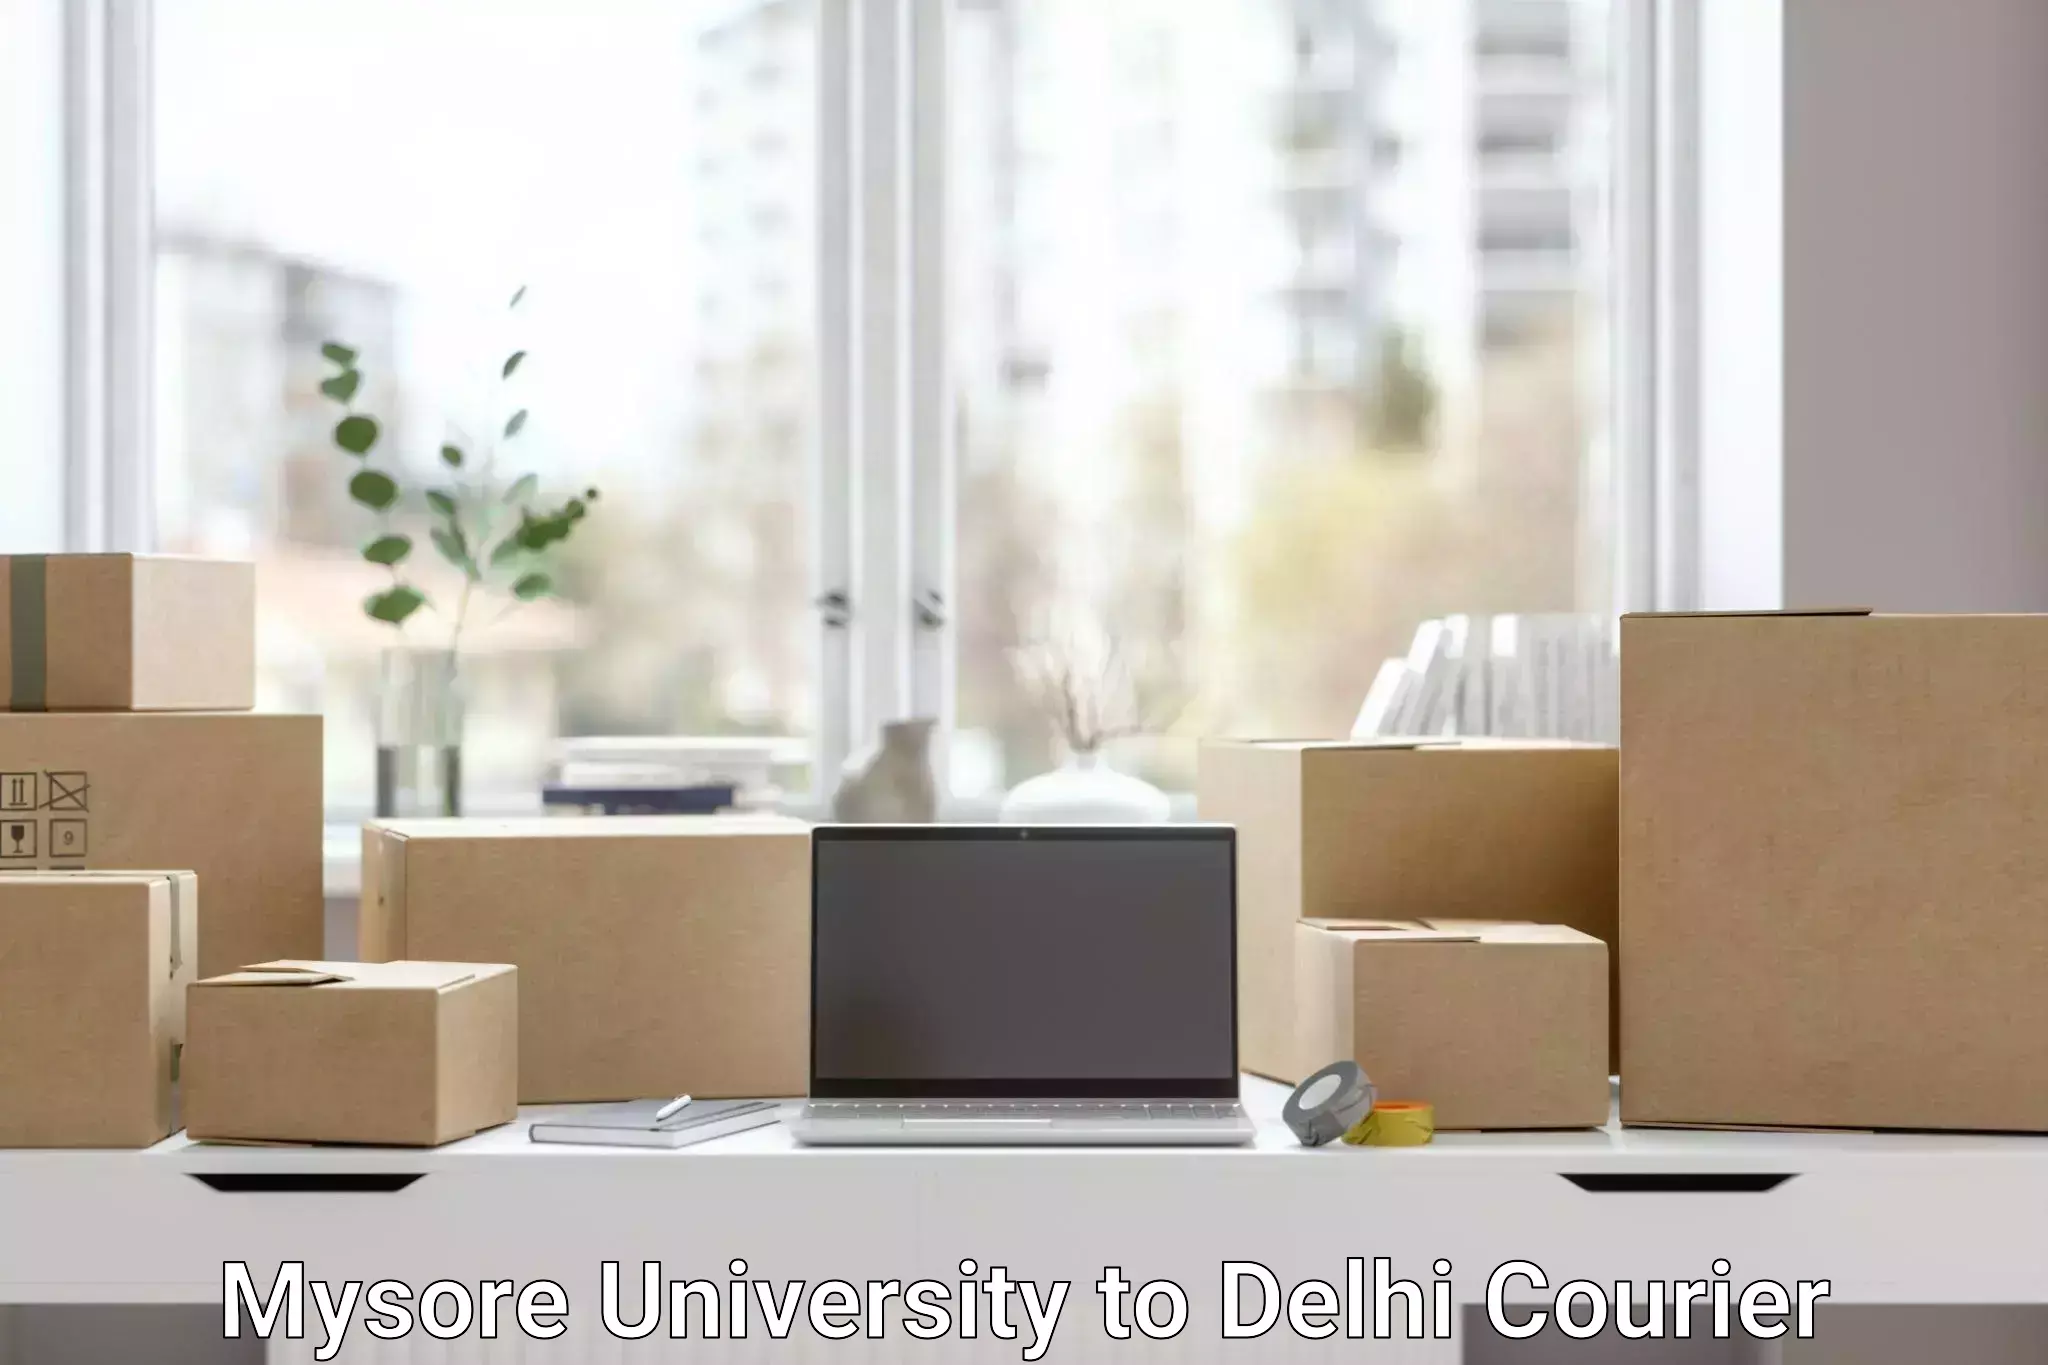 Modern delivery methods Mysore University to University of Delhi